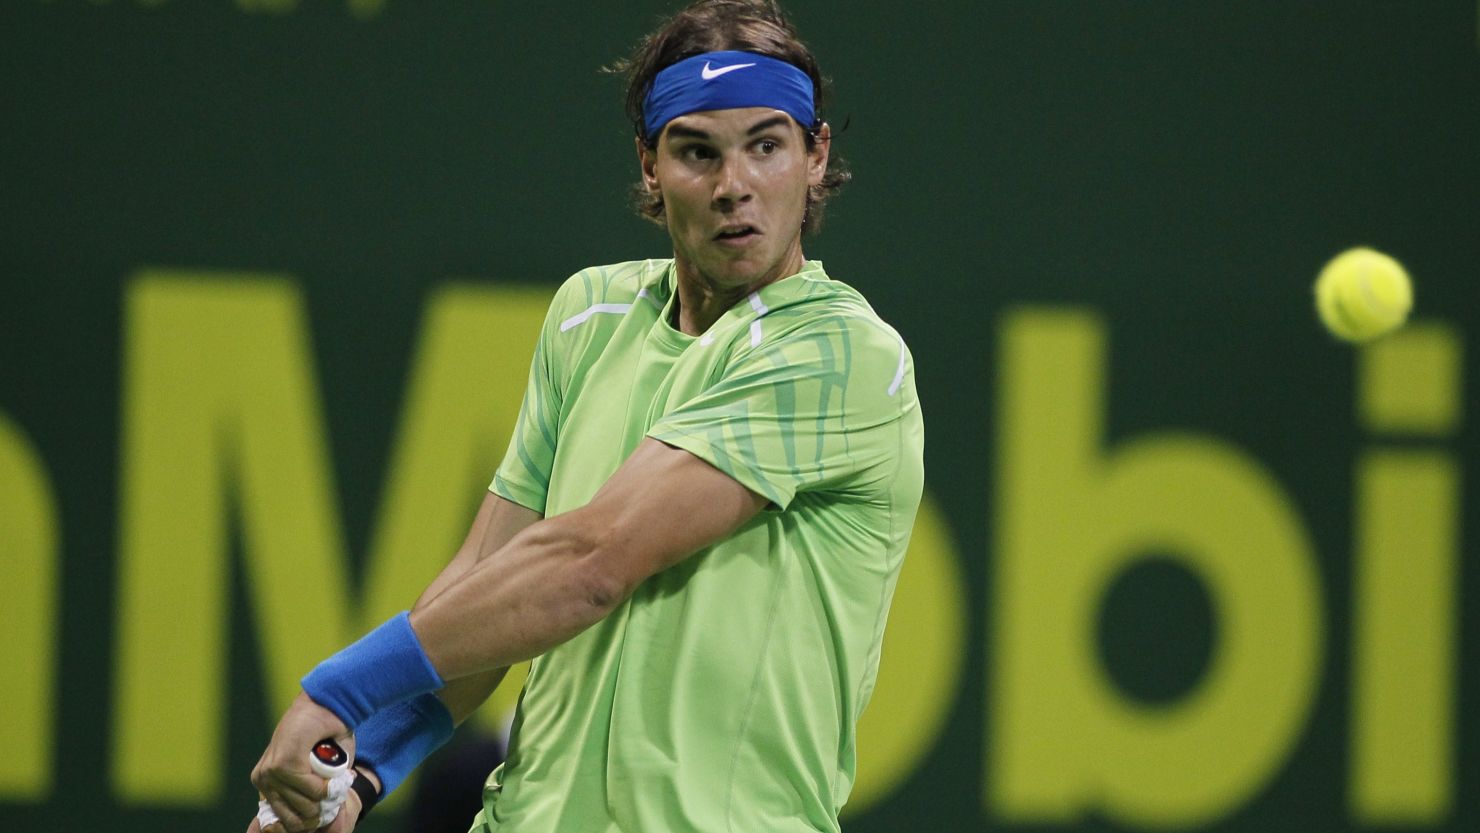 Rafael Nadal plays a return during his first round win over Philipp Kohlschreiber in Qatar